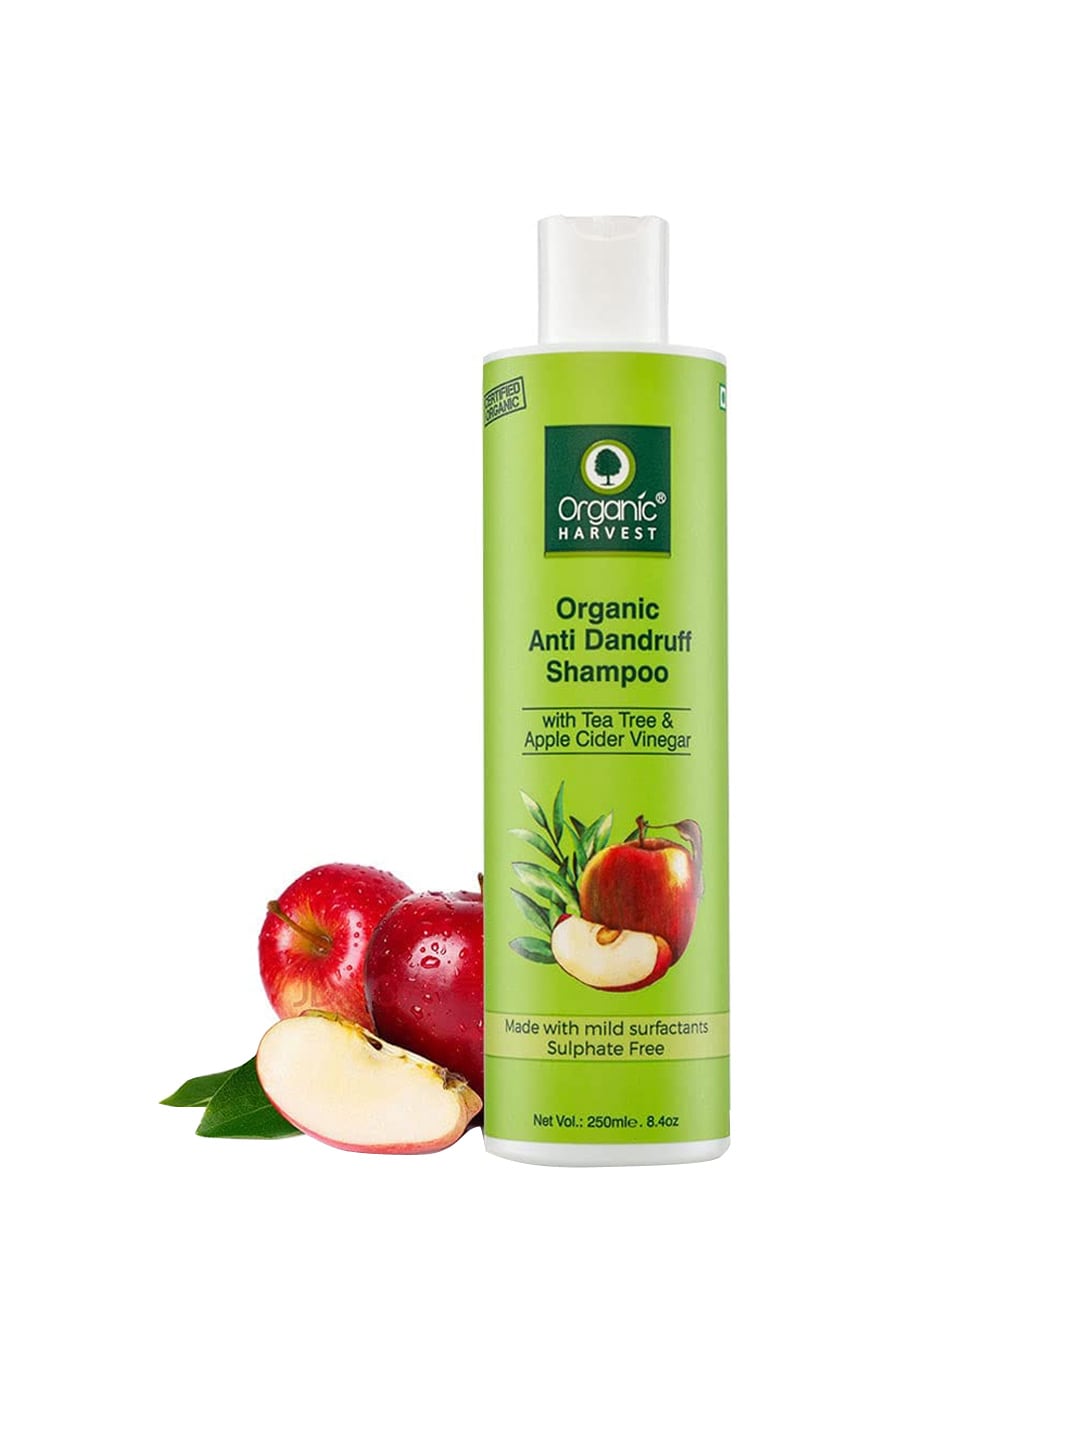 Organic Harvest Apple Cider Vinegar & Tea Tree Oil Anti Dandruff Shampoo - 250 ml Price in India